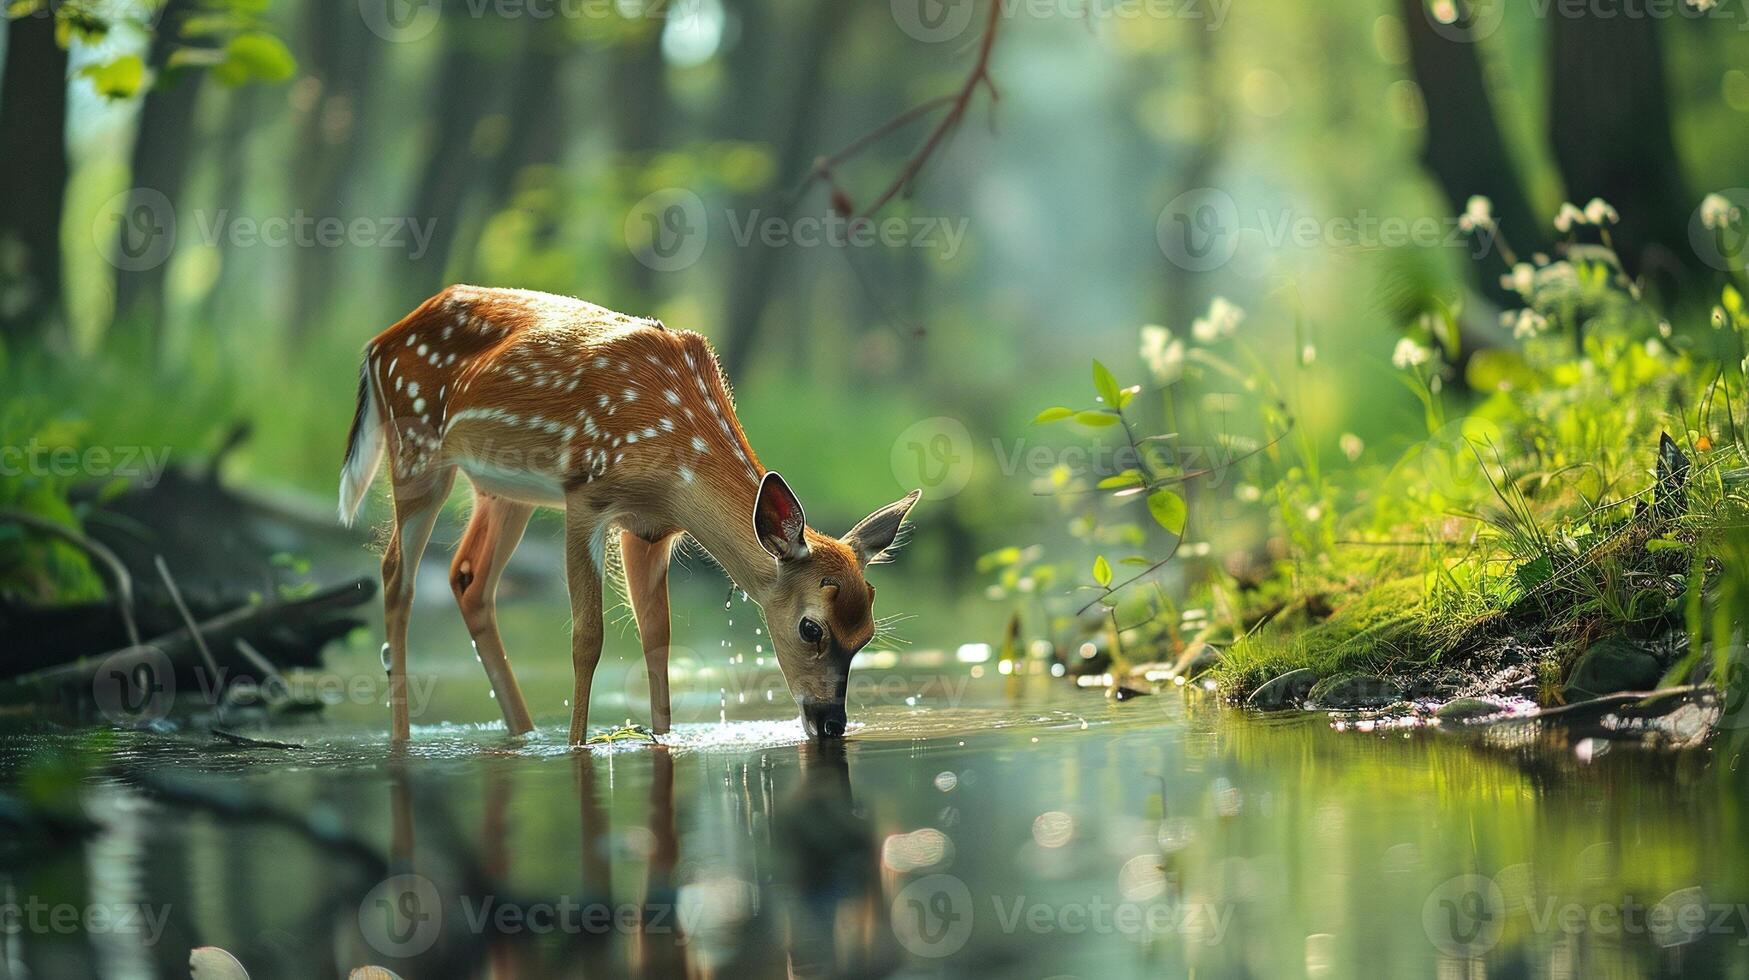 deer drinking water in river in forest, serene wildlife landscape photo